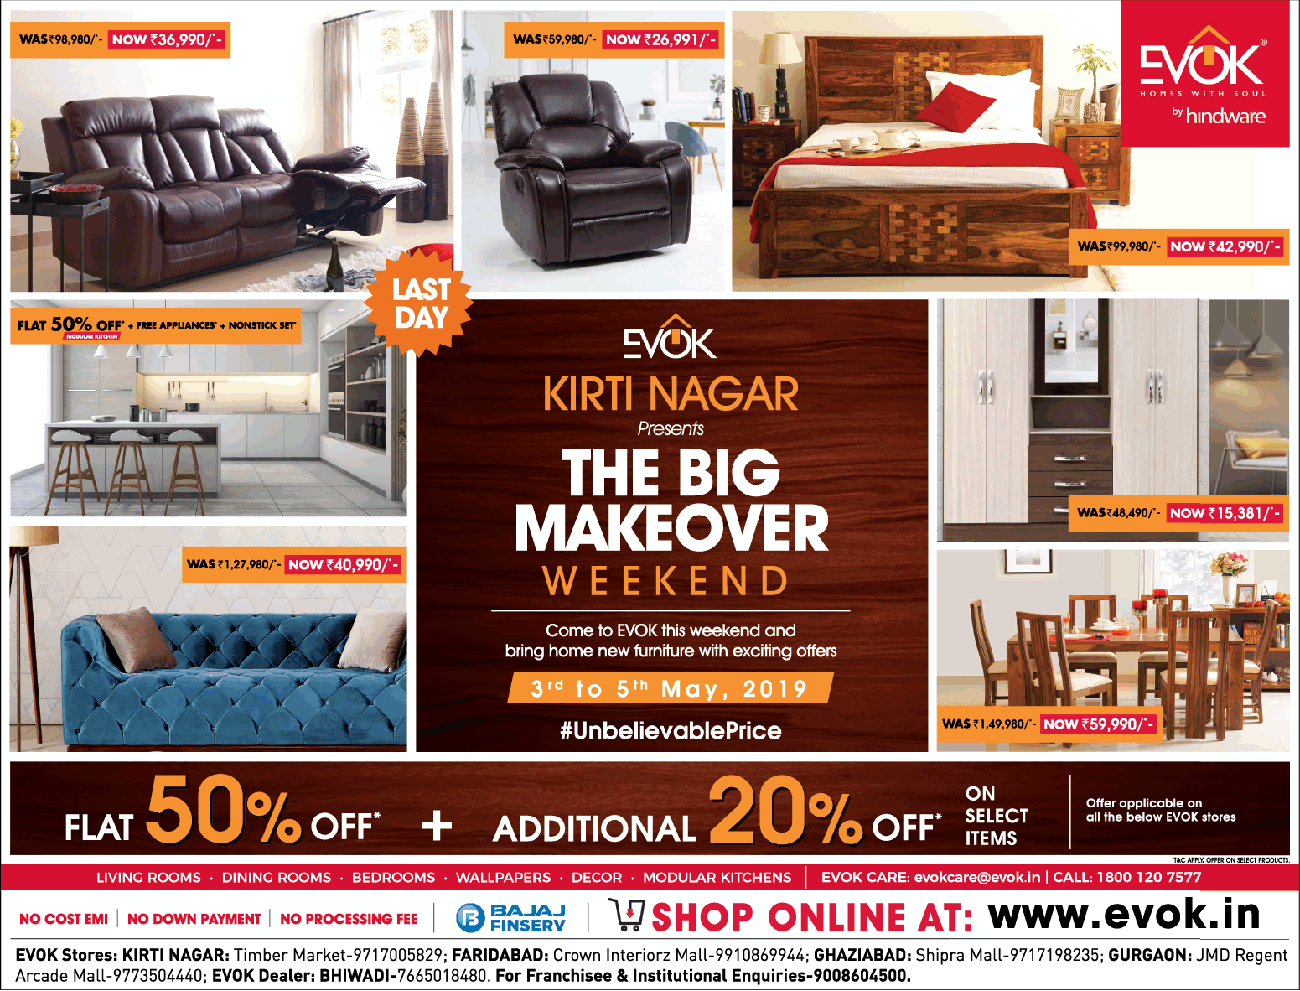 evok-furniture-the-big-makeover-weekend-flat-50%-off-ad-delhi-times-05-05-2019.png